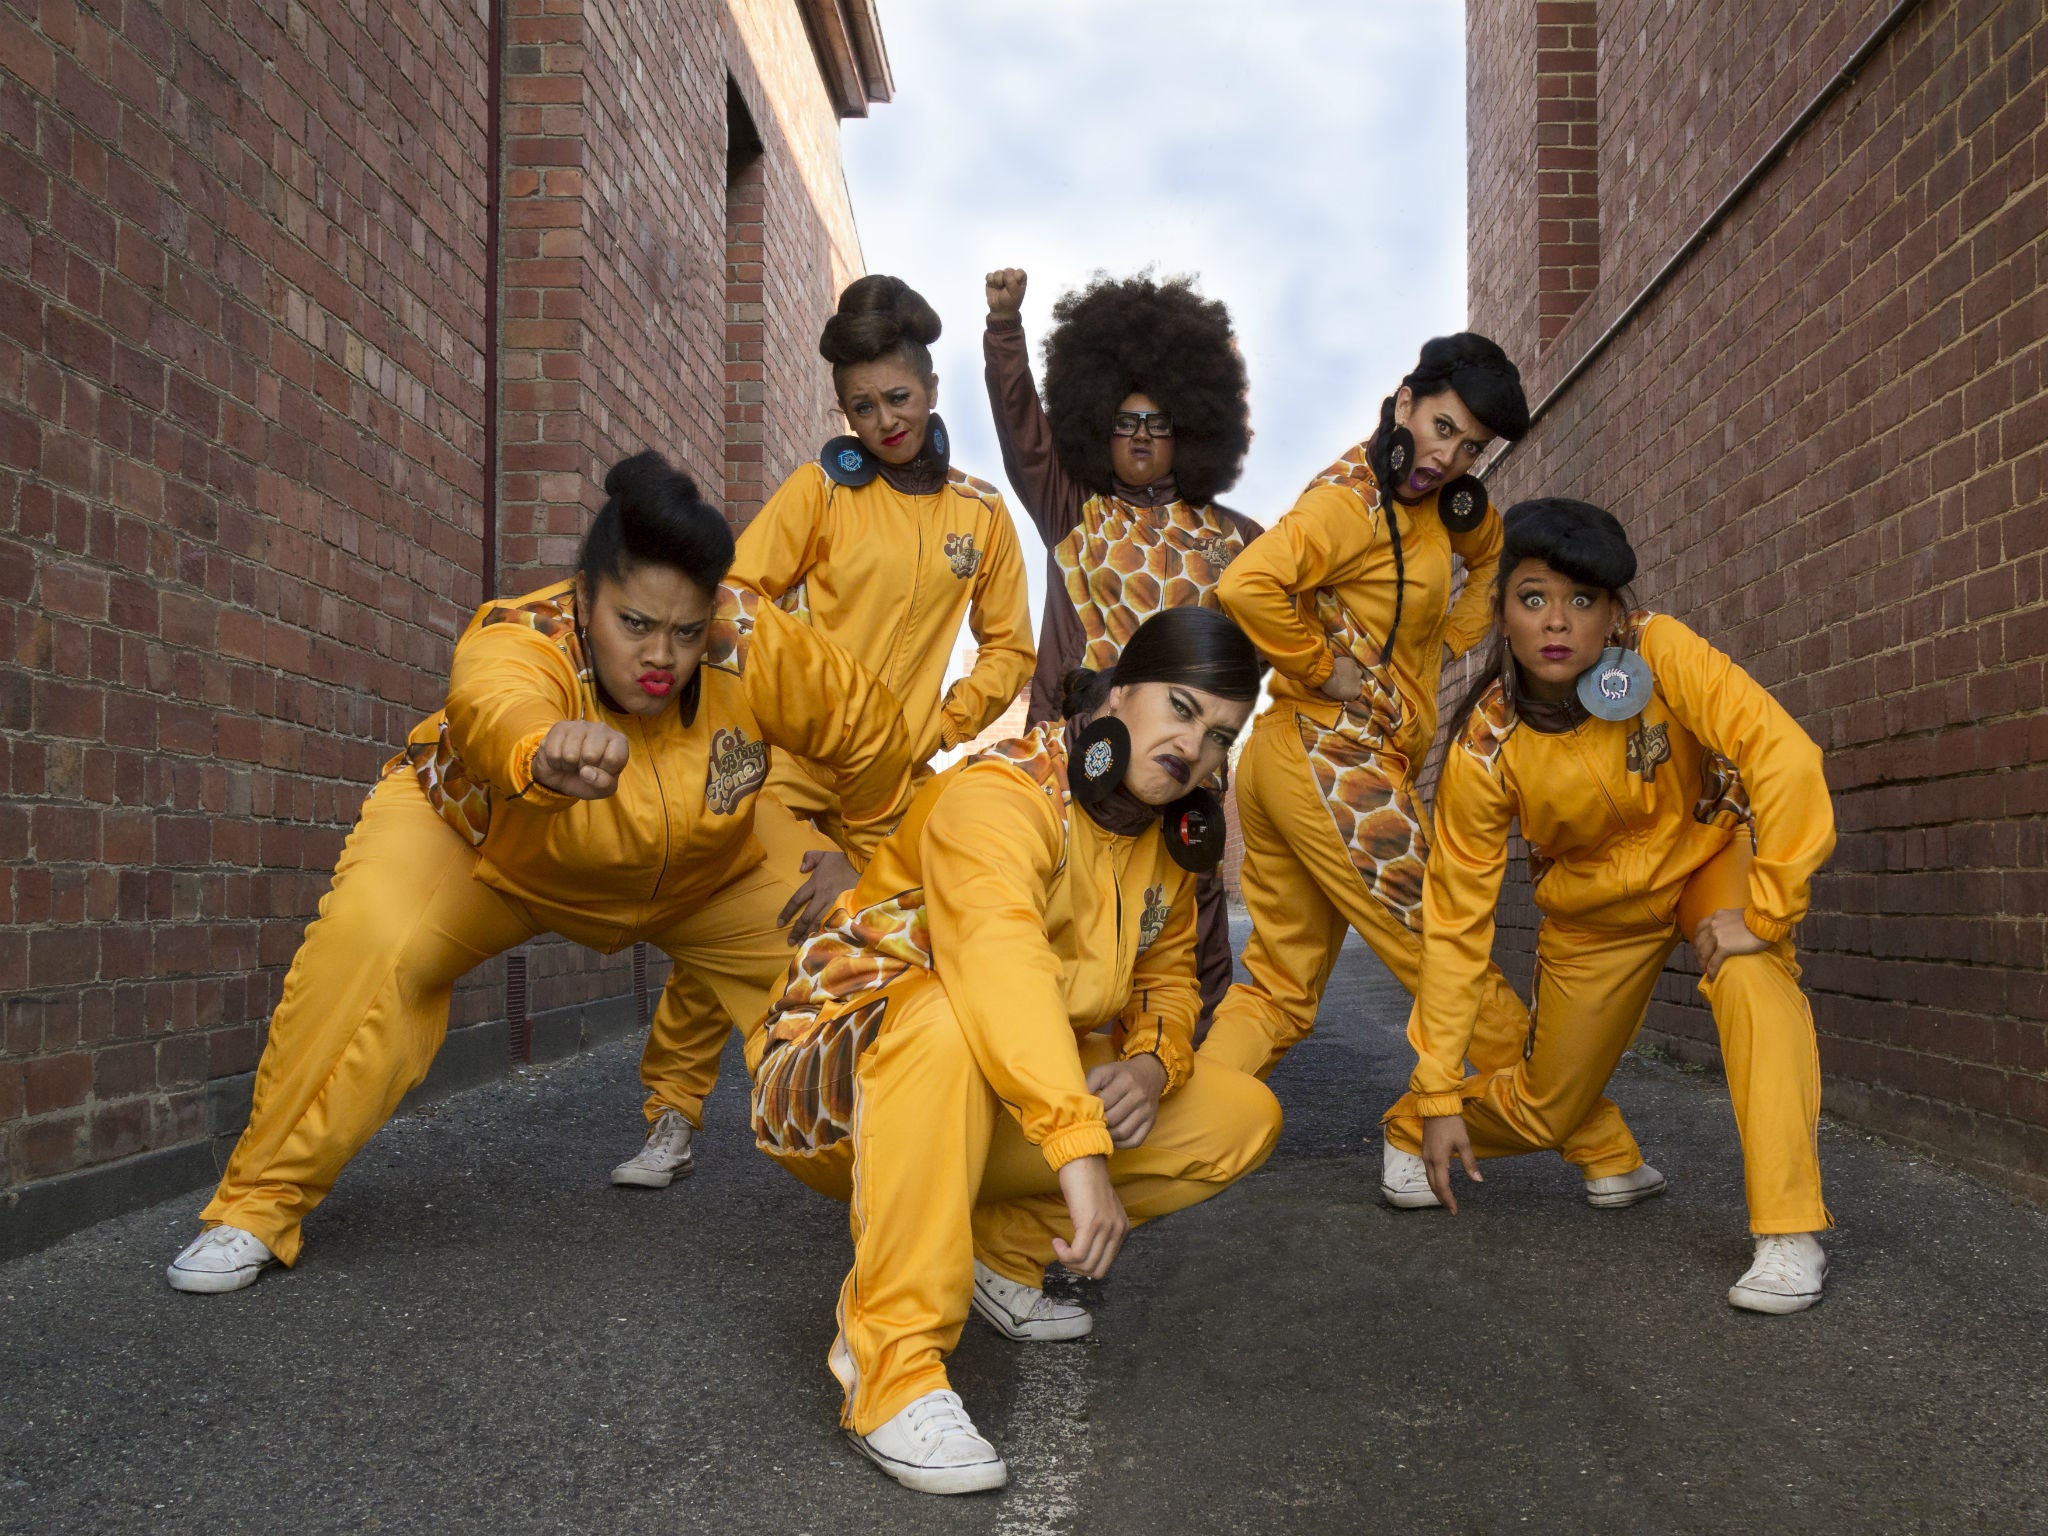 Hot Brown Honey’s shows mix hip hop, dance, circus, and burlesque